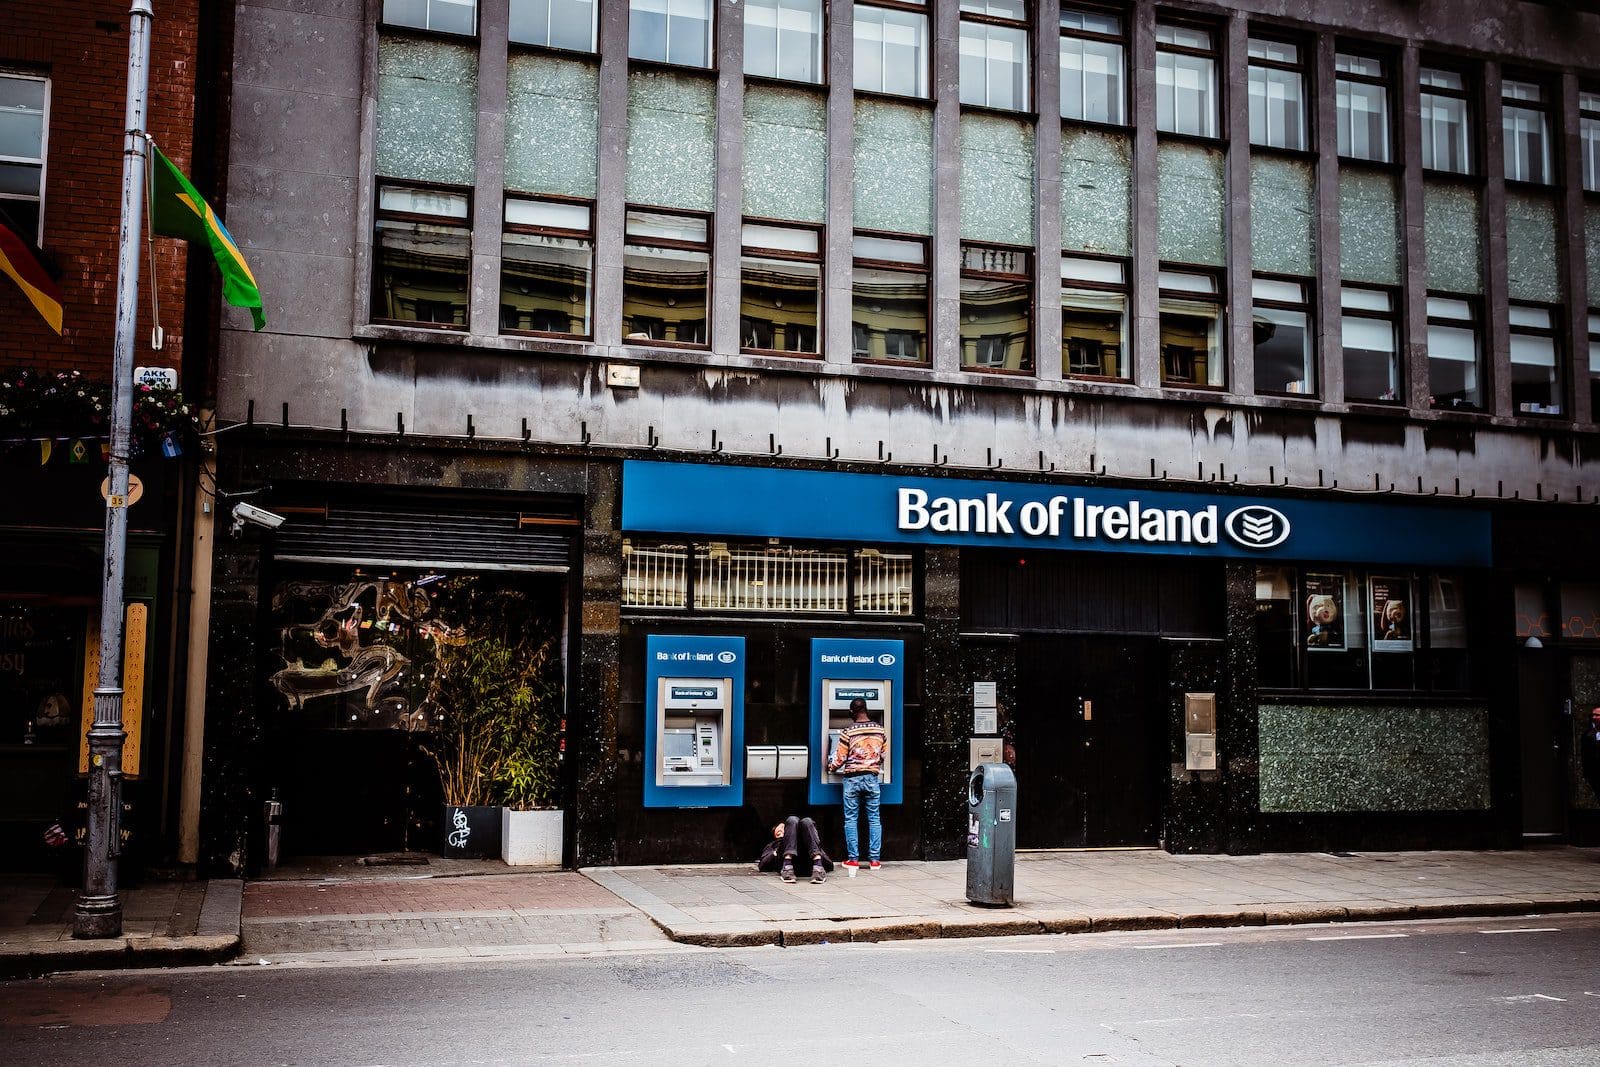 nationalised banks